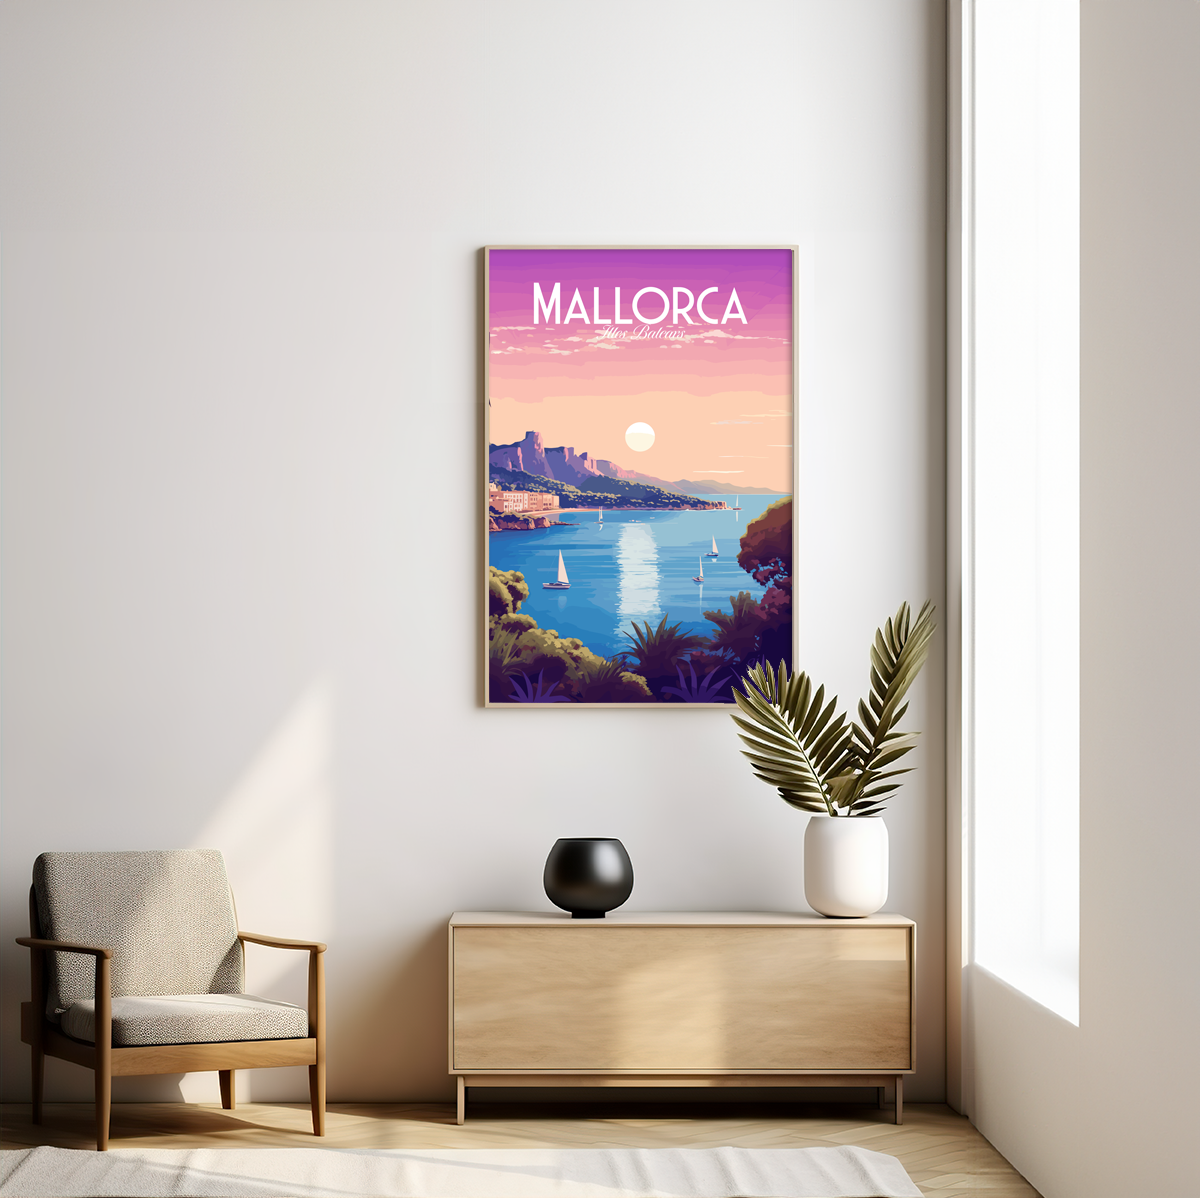 Mallorca - Beach poster by bon voyage design